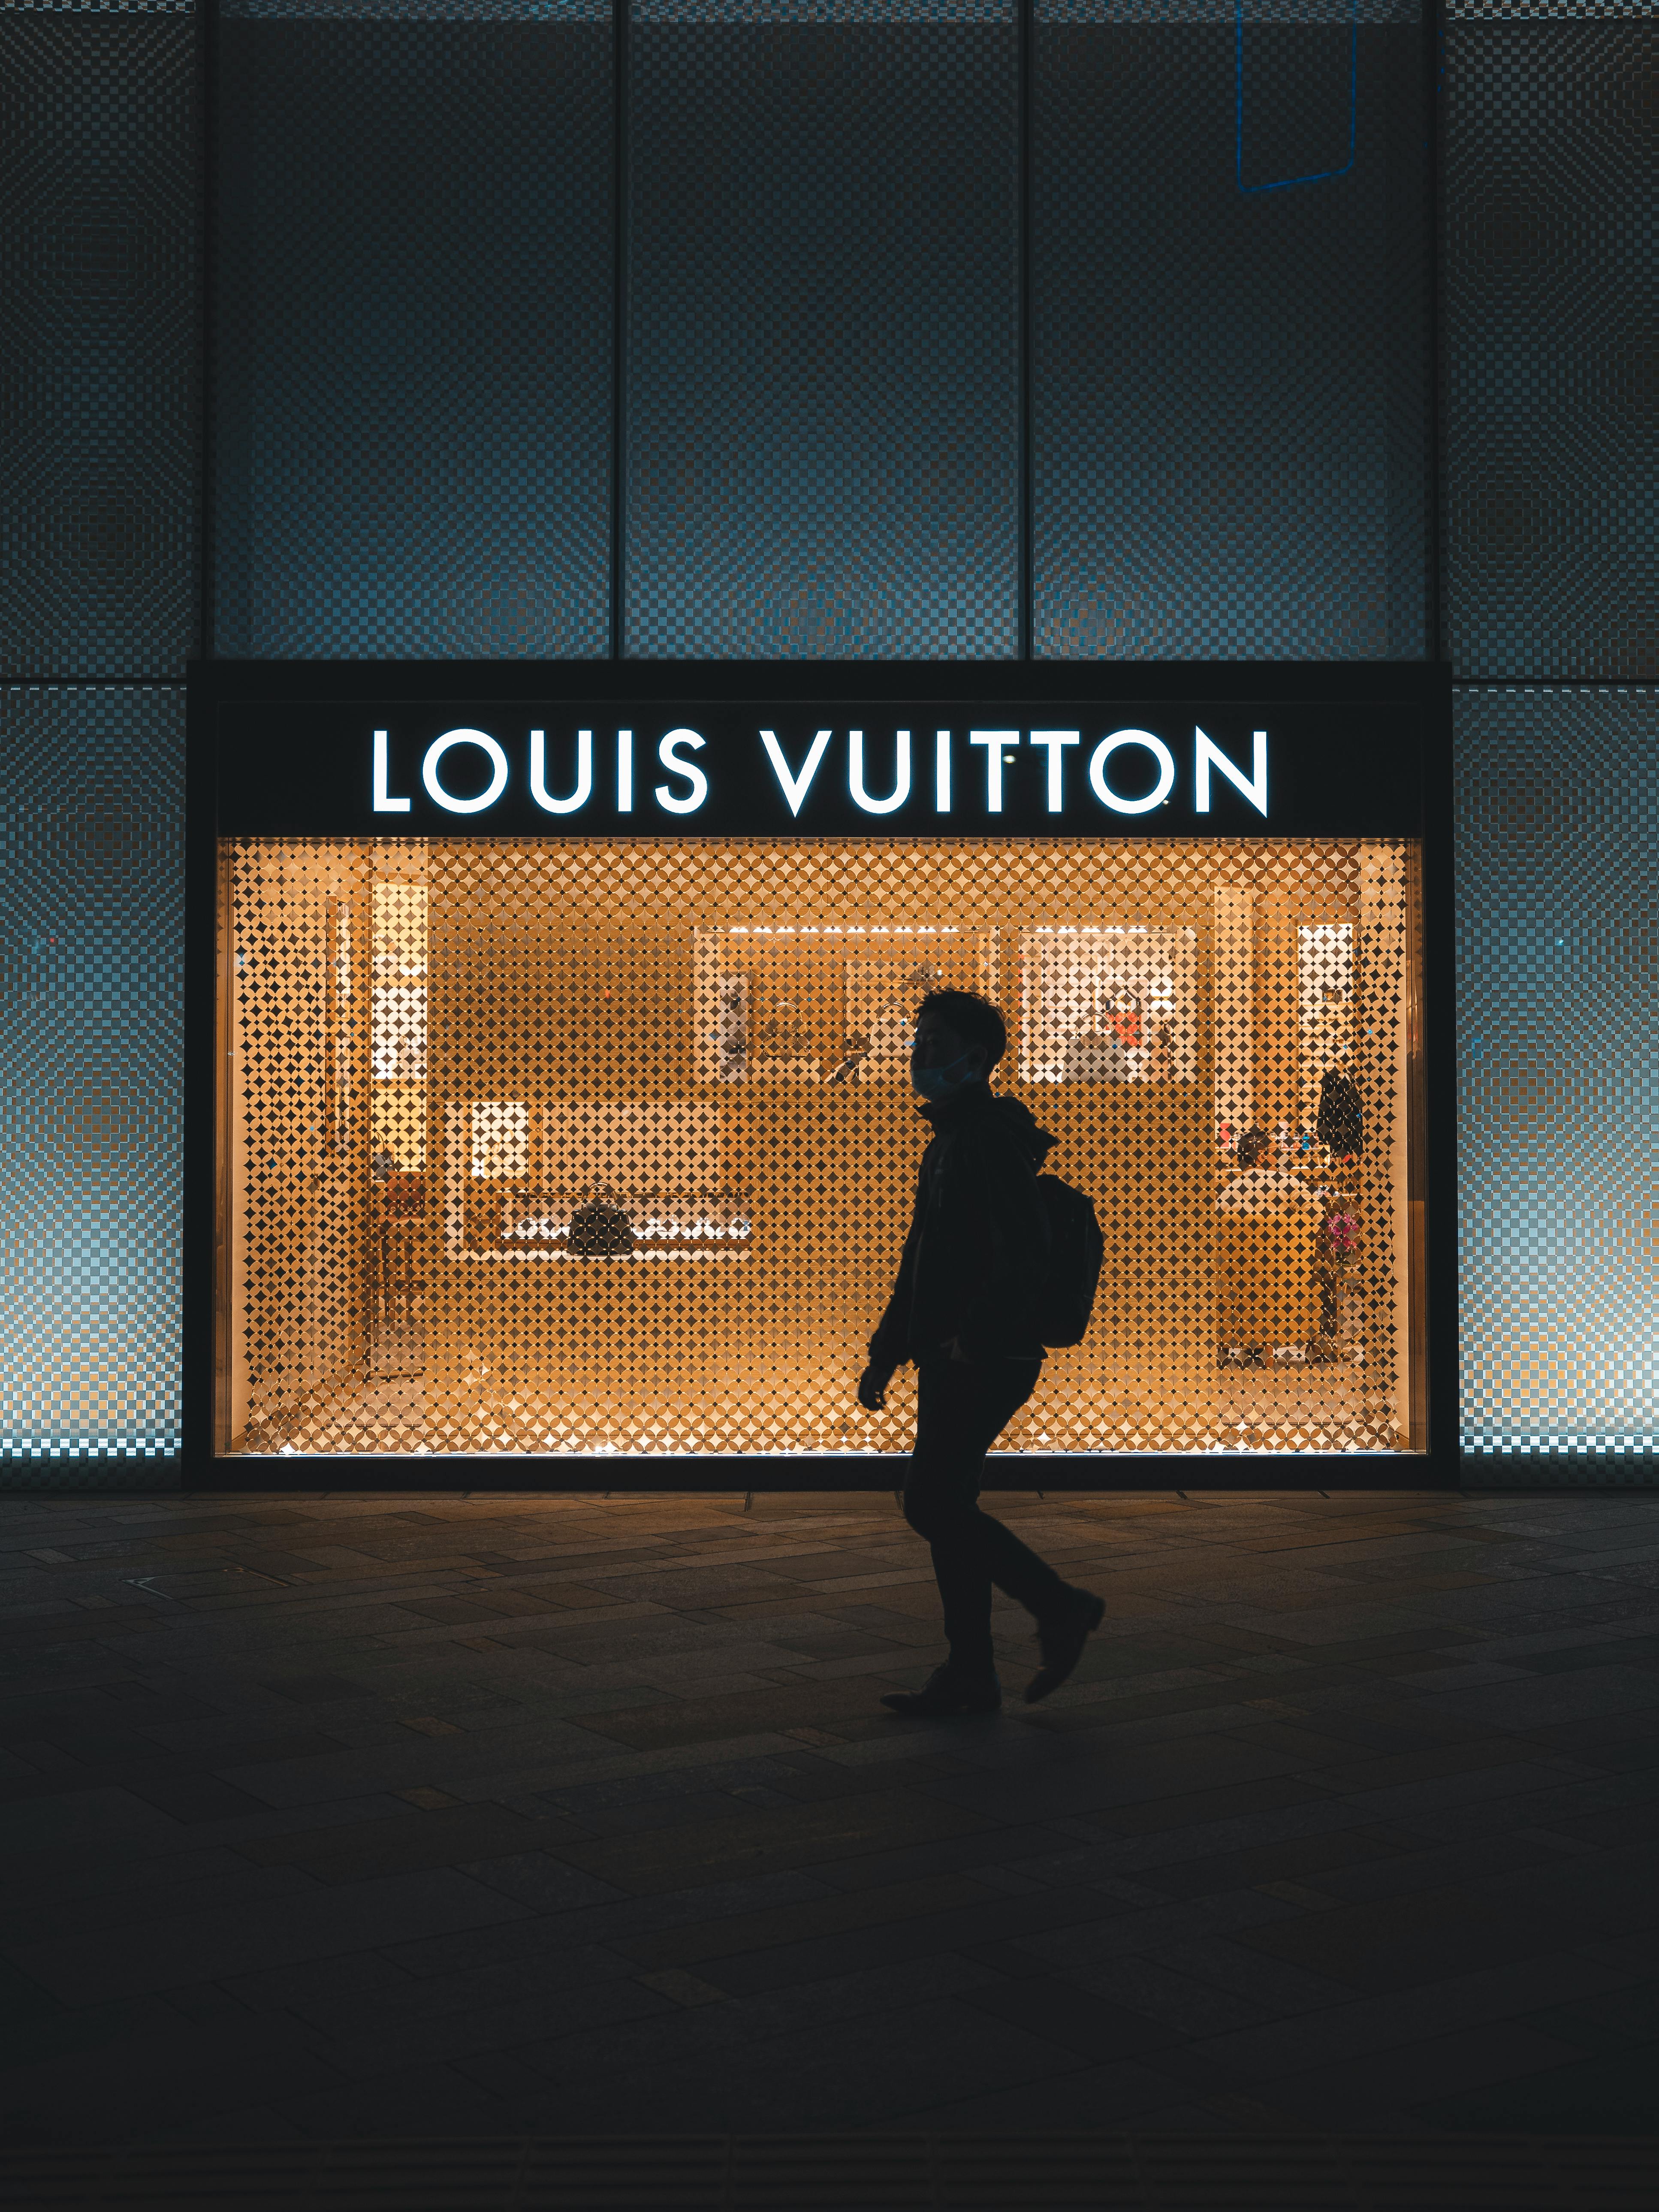 Louis Vuitton Grass Wall Photos, Download The BEST Free Louis